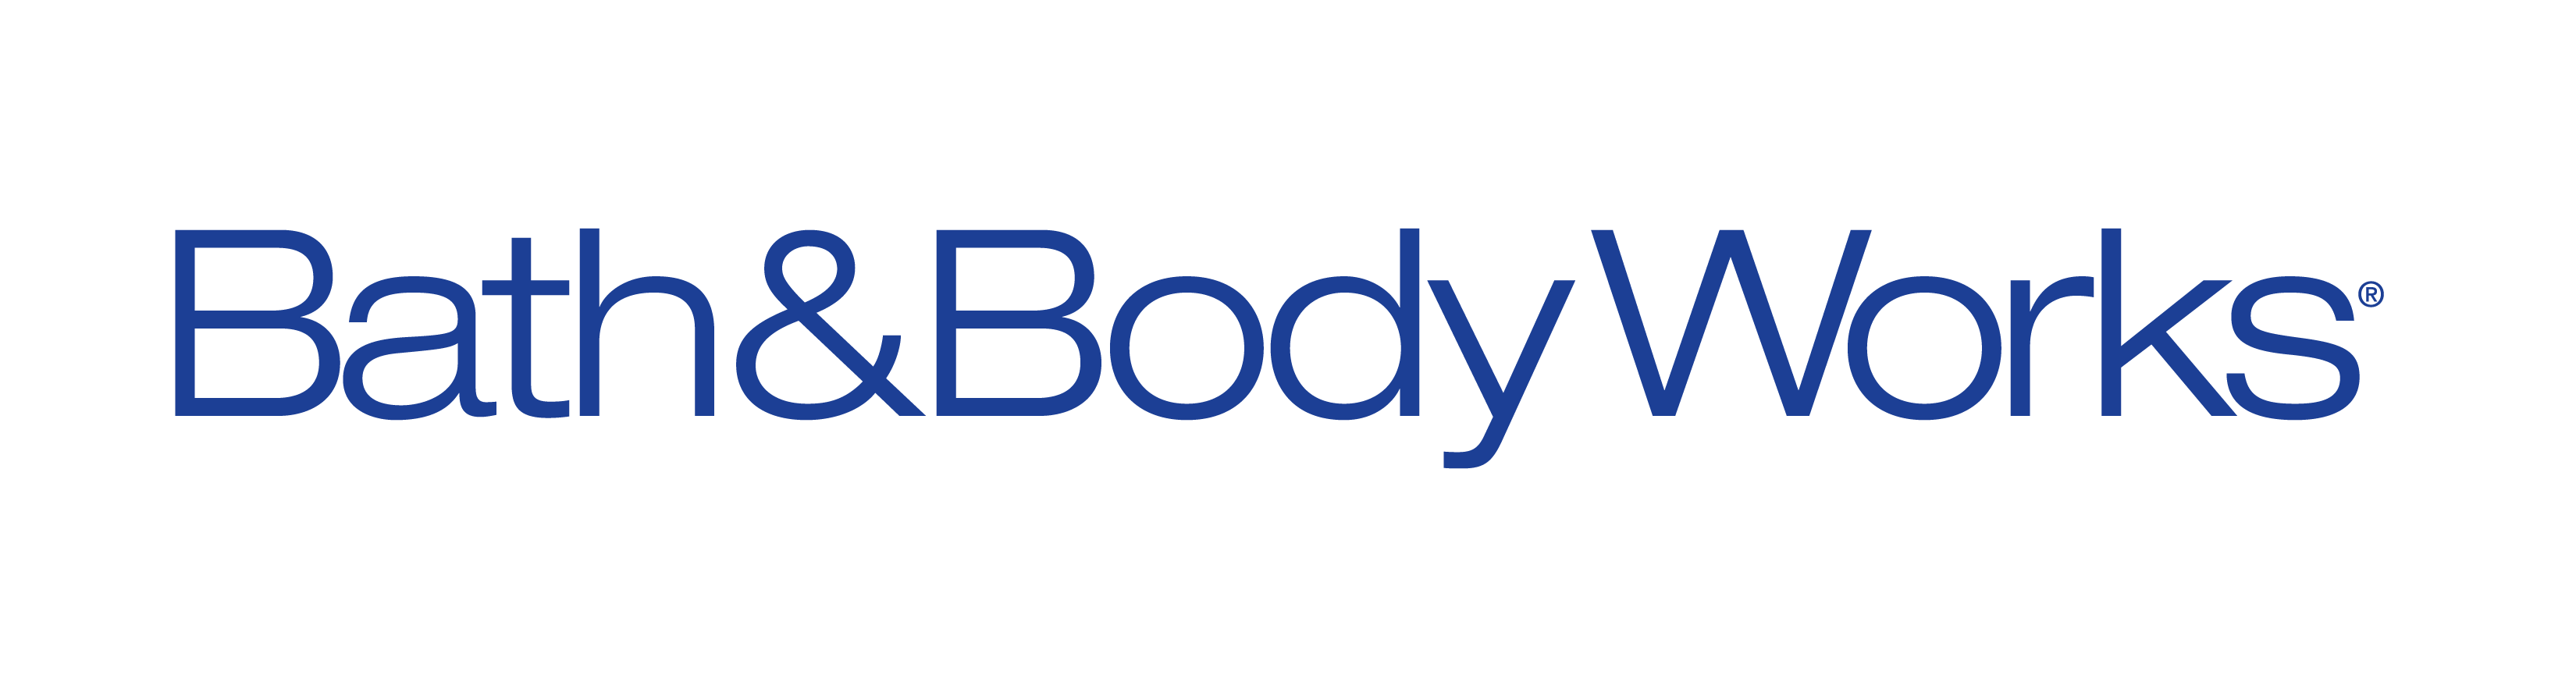 Bath and Body Company Logo - L Brands - Assets